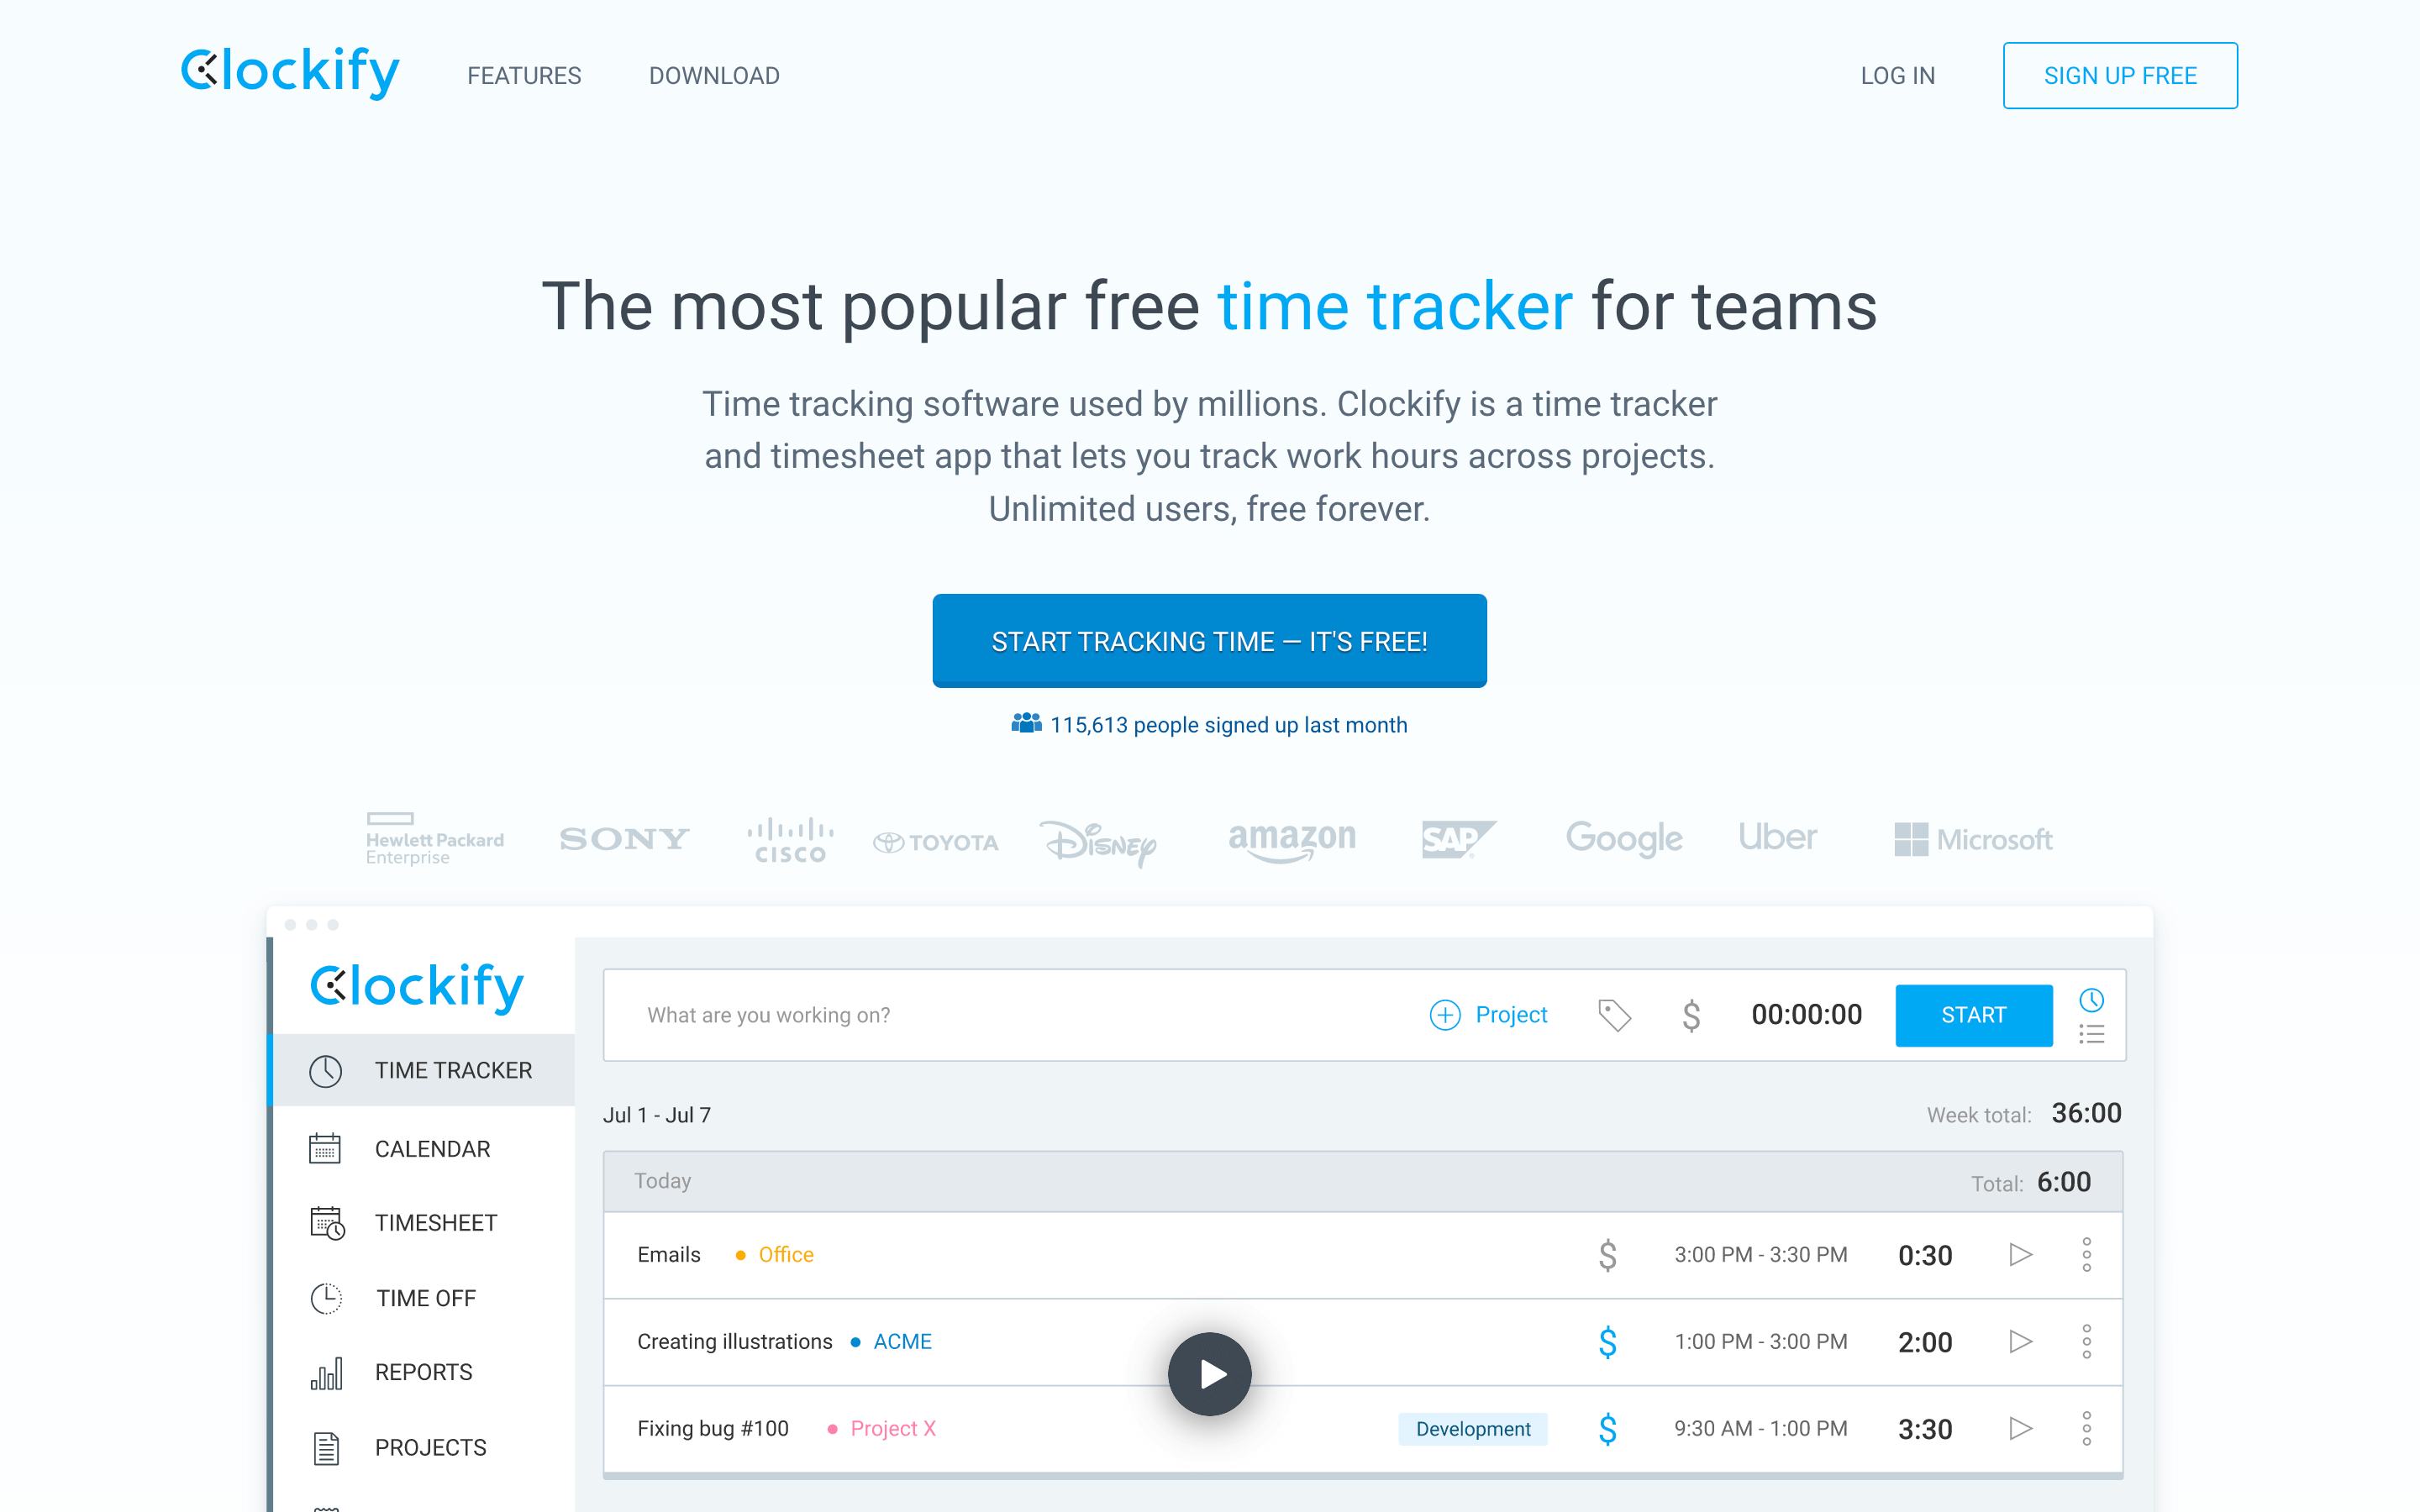  A screenshot of Clockify's homepage